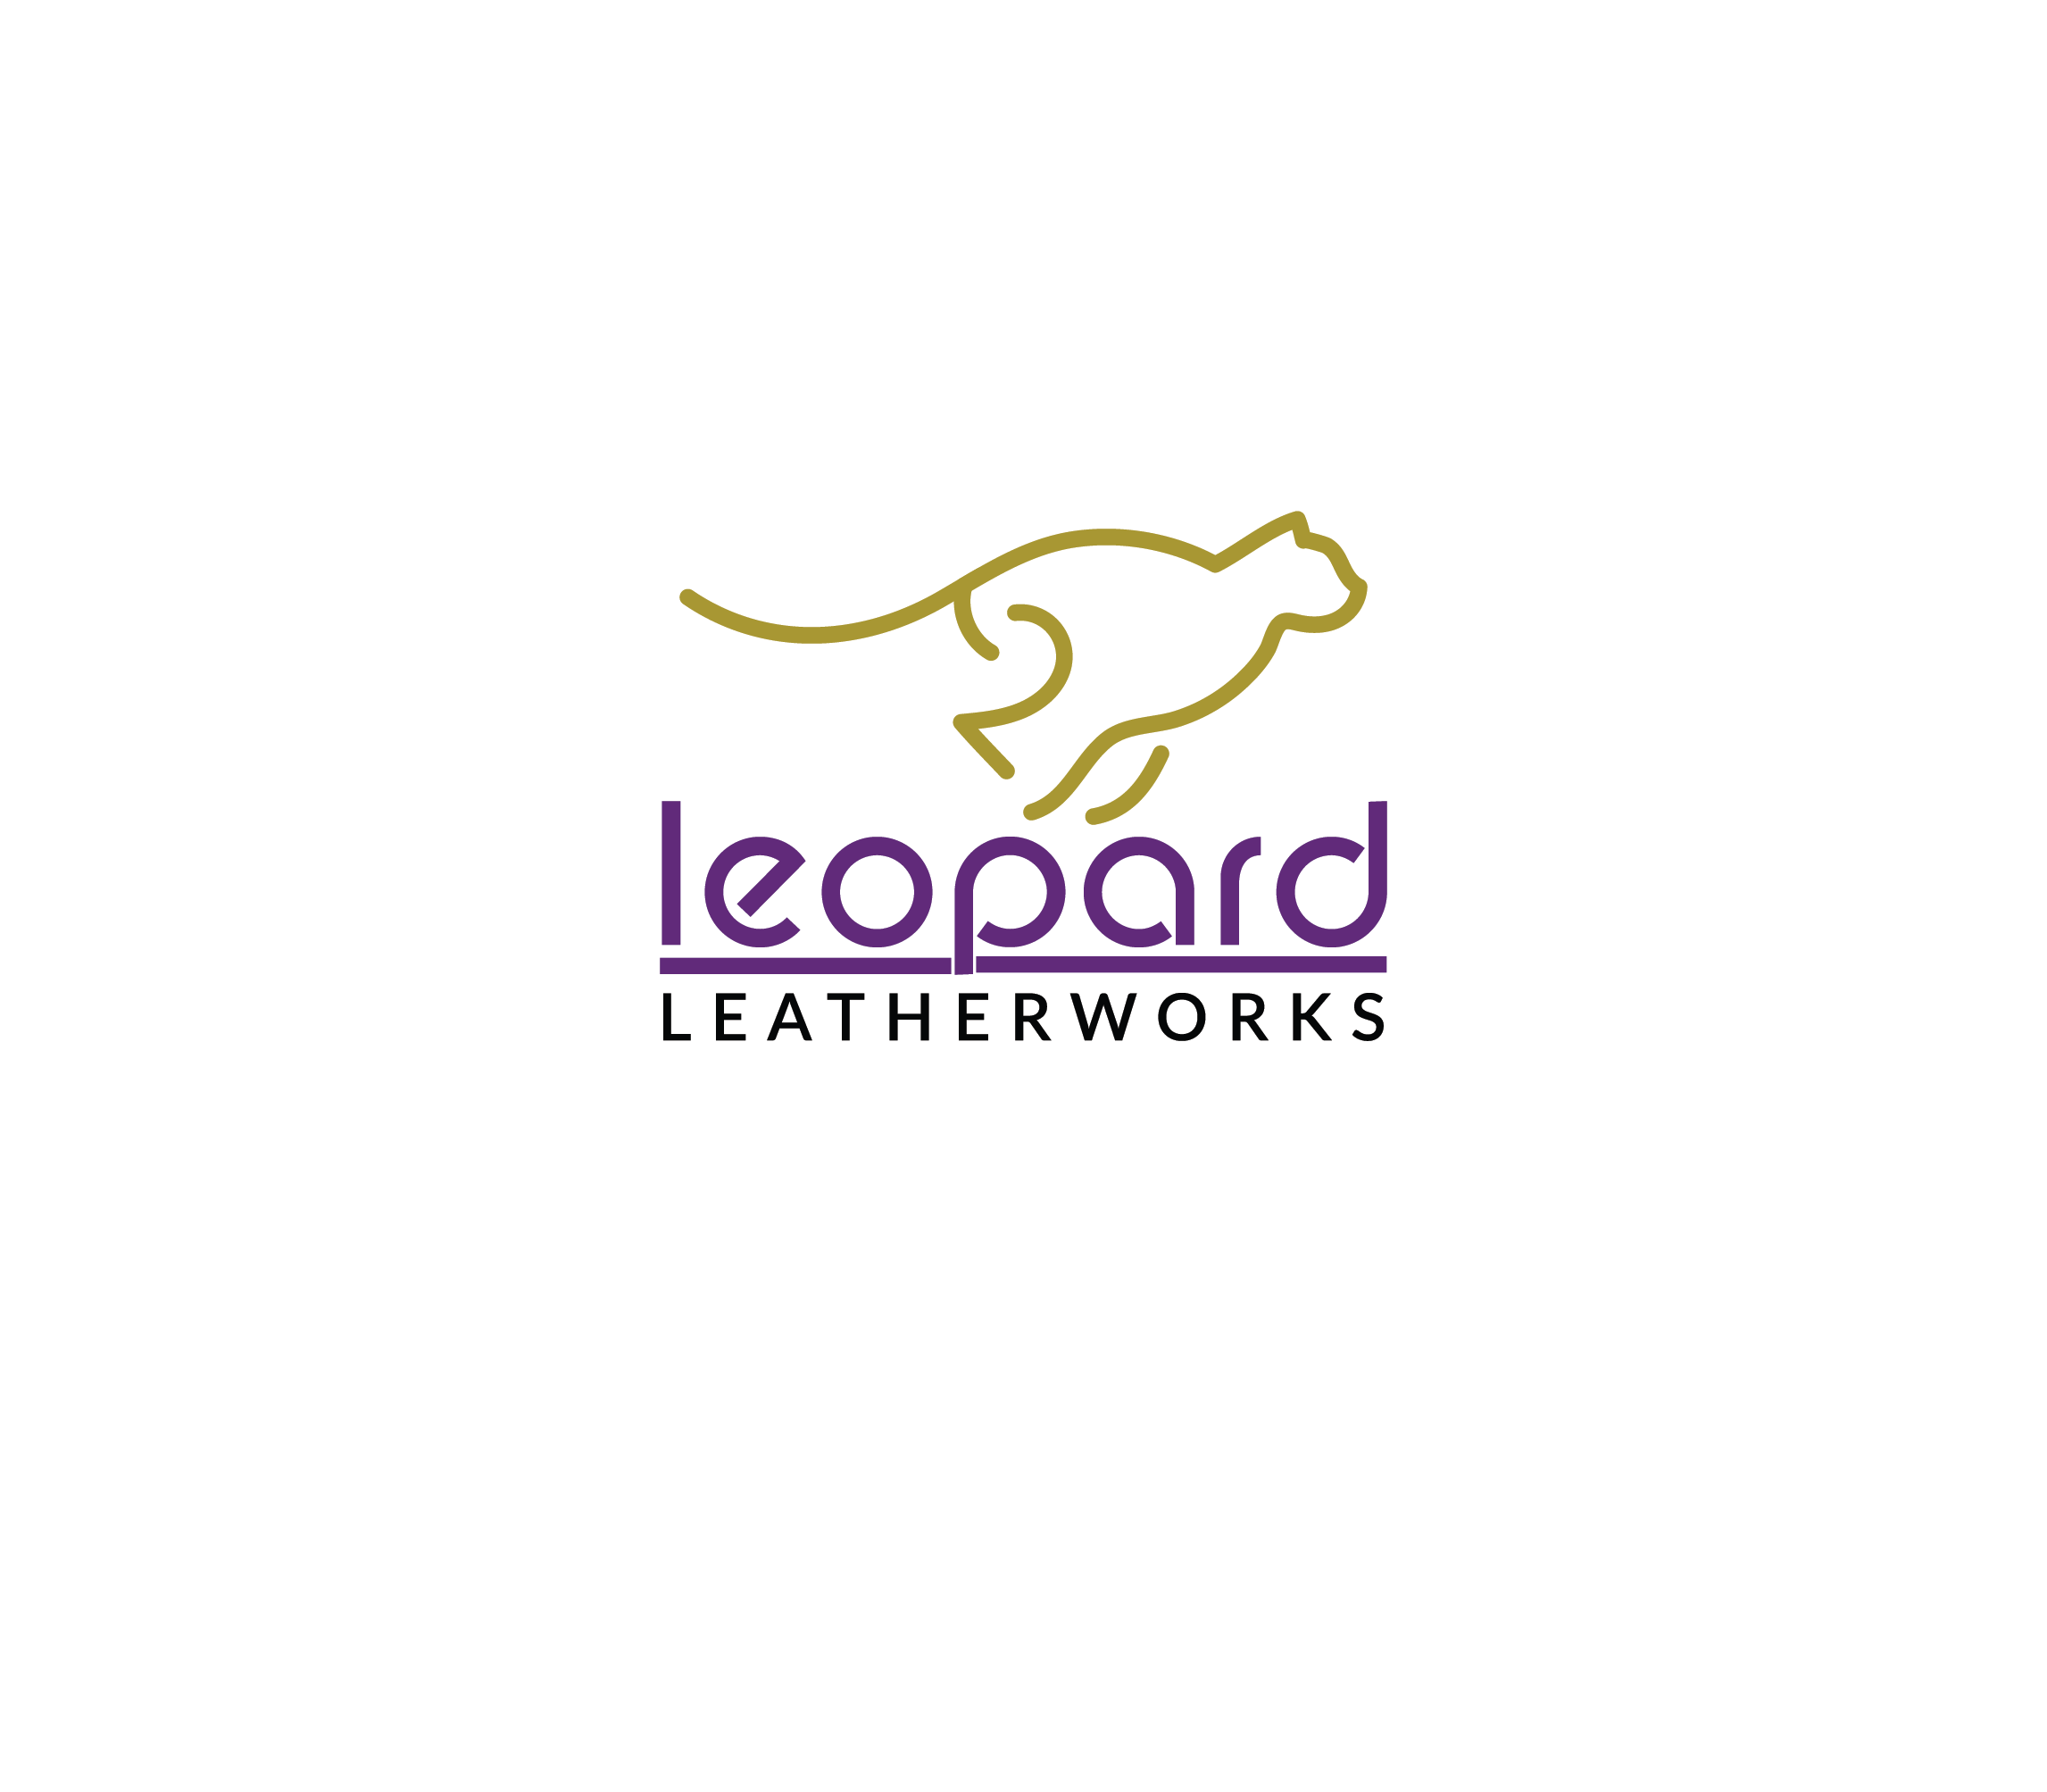 Leopard Leatherworks